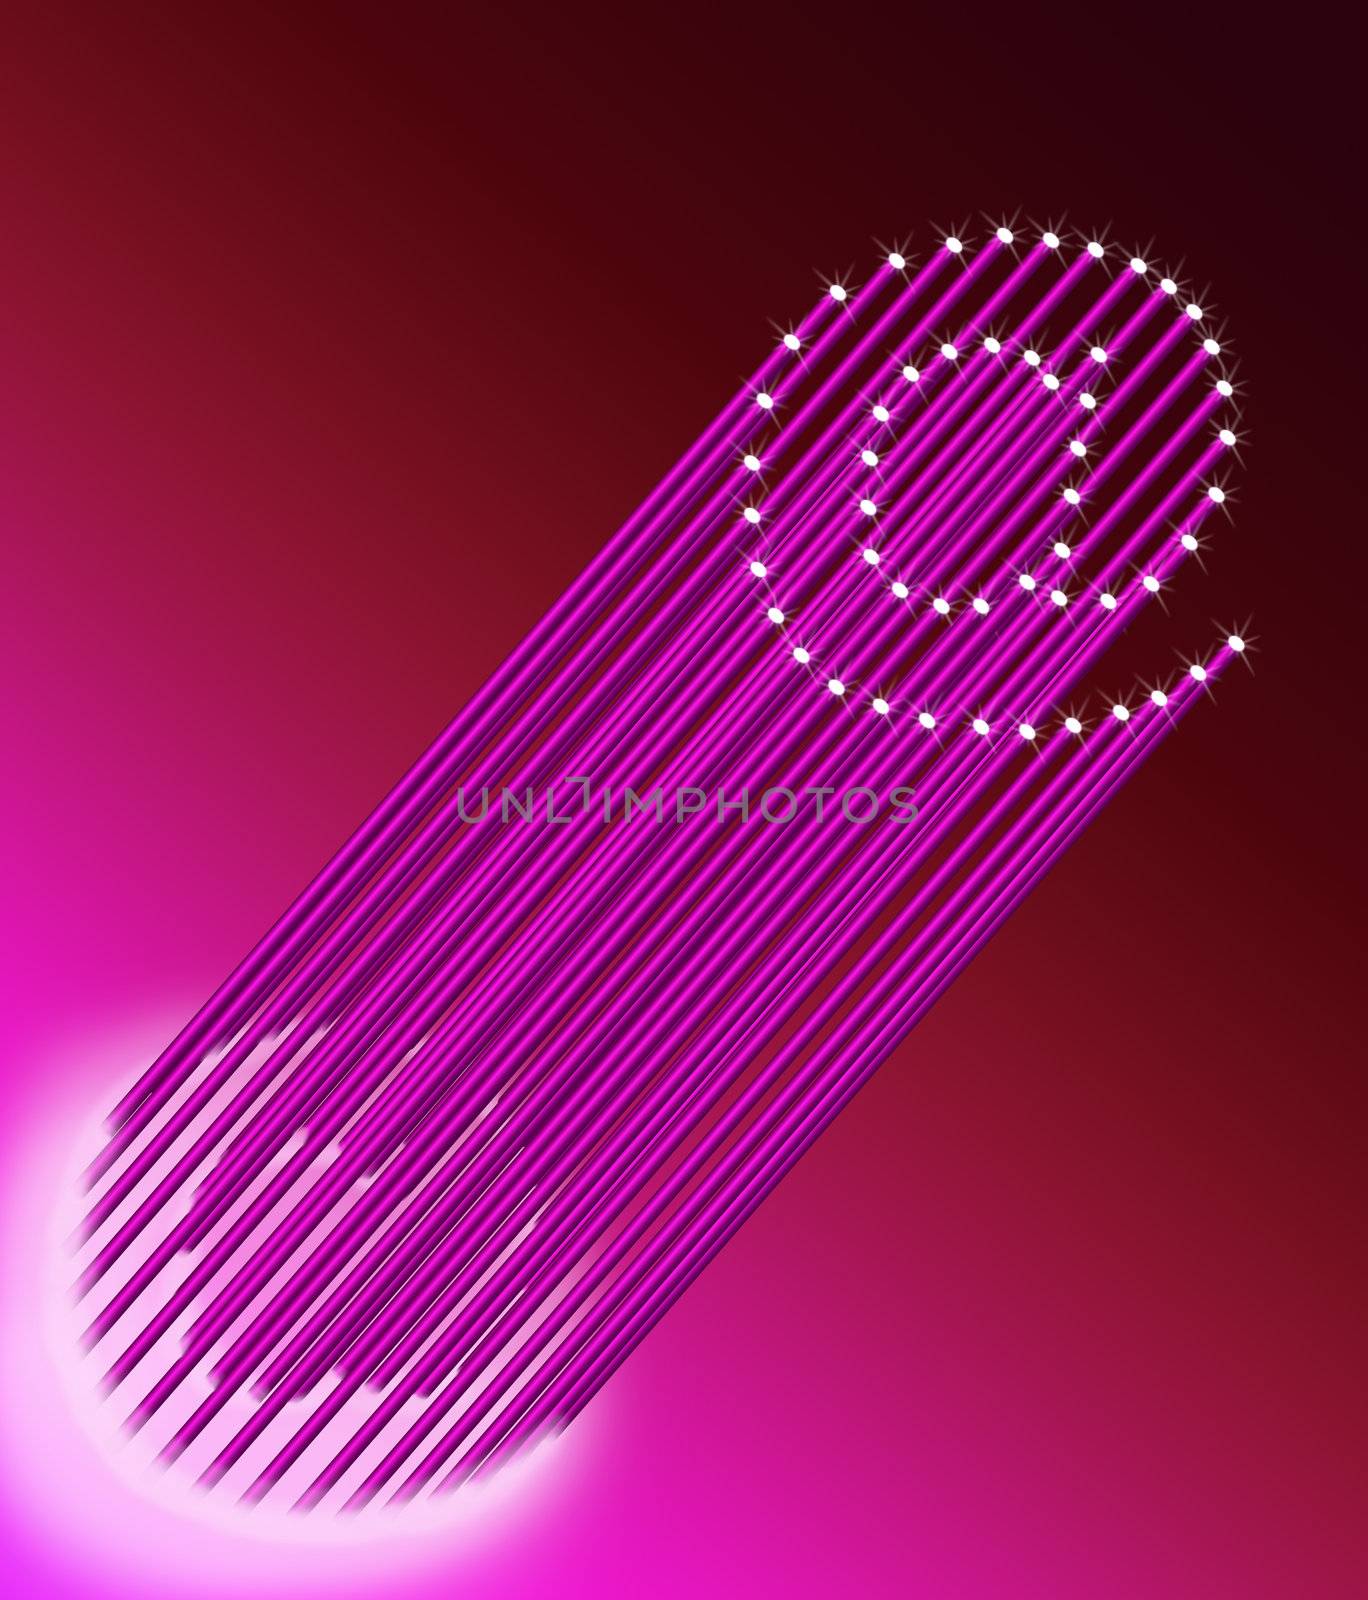 Illustration depicting many illuminated pink fiber optic light strands arranged to form the ampersat symbol. Dark pink background.